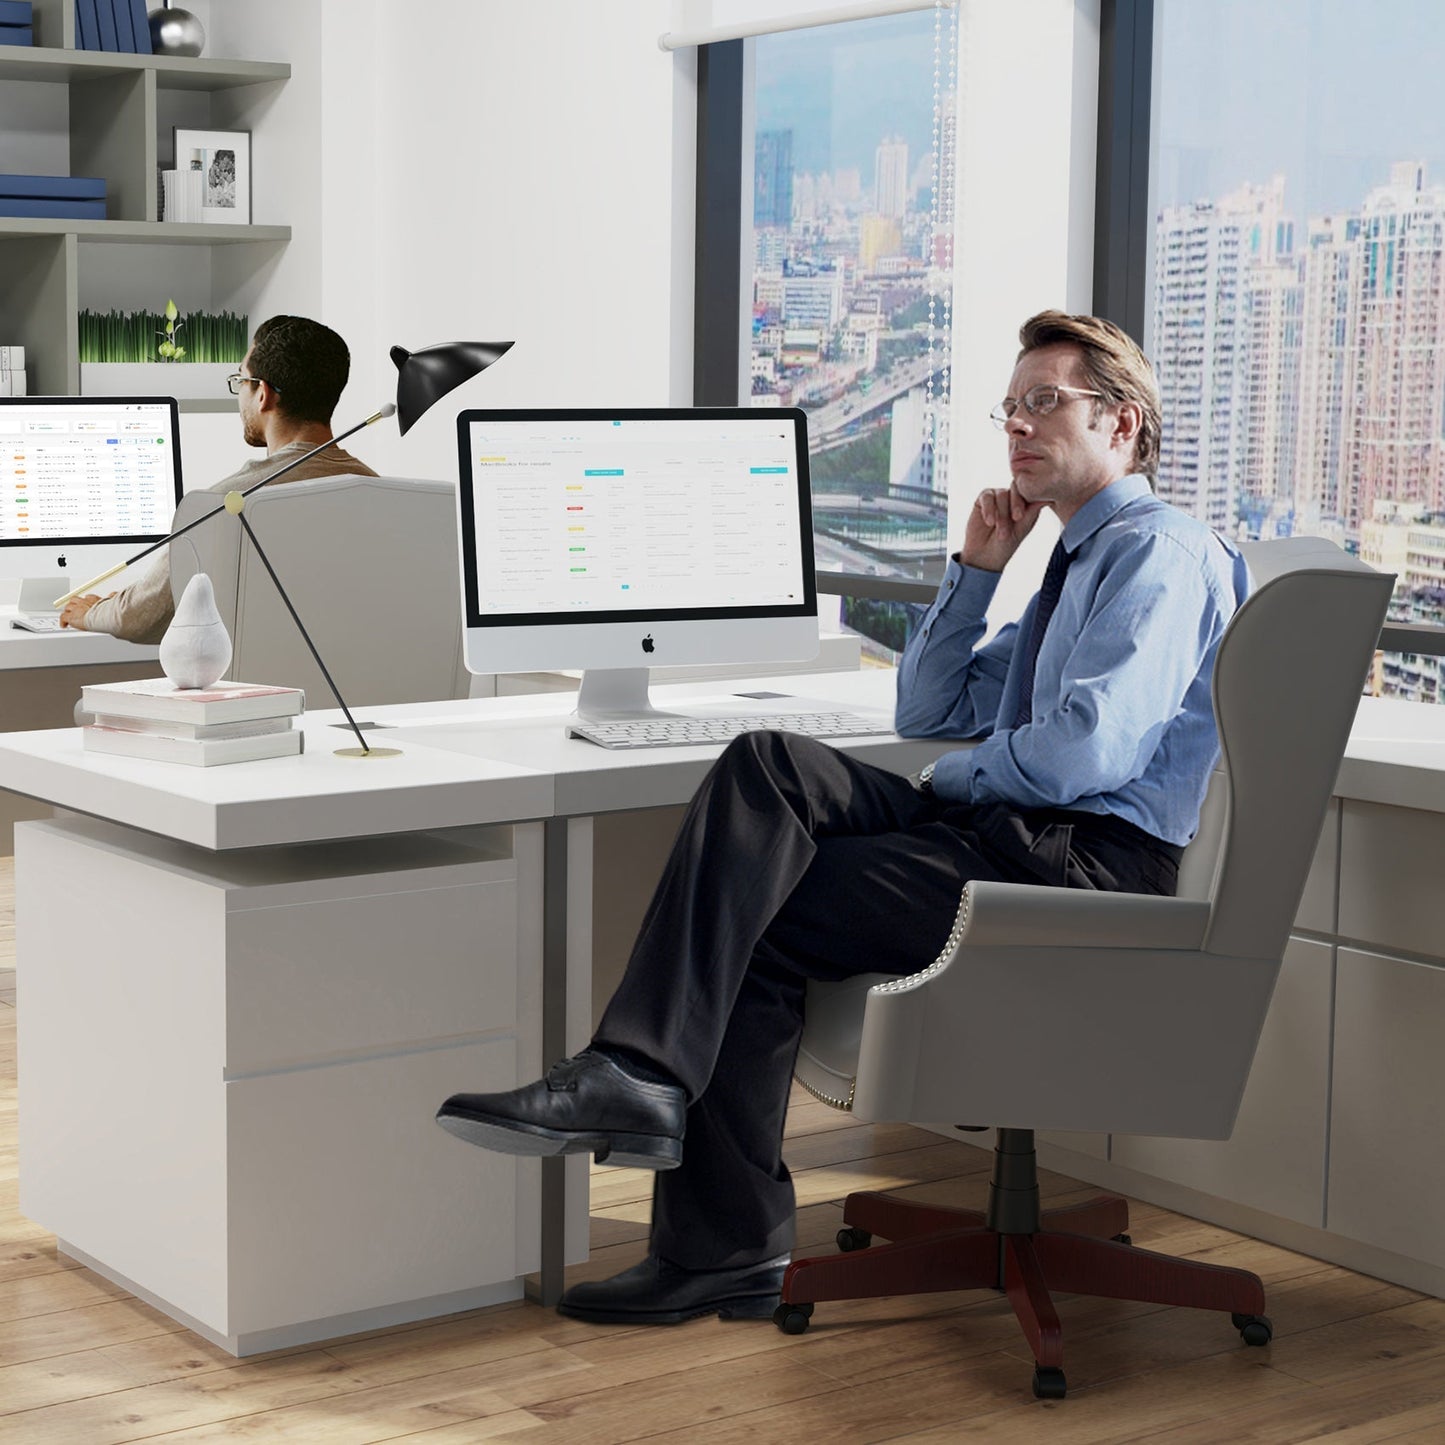 330LBS Executive Office Chair, Ergonomic Design High Back Reclining Comfortable Desk Chair - Grey